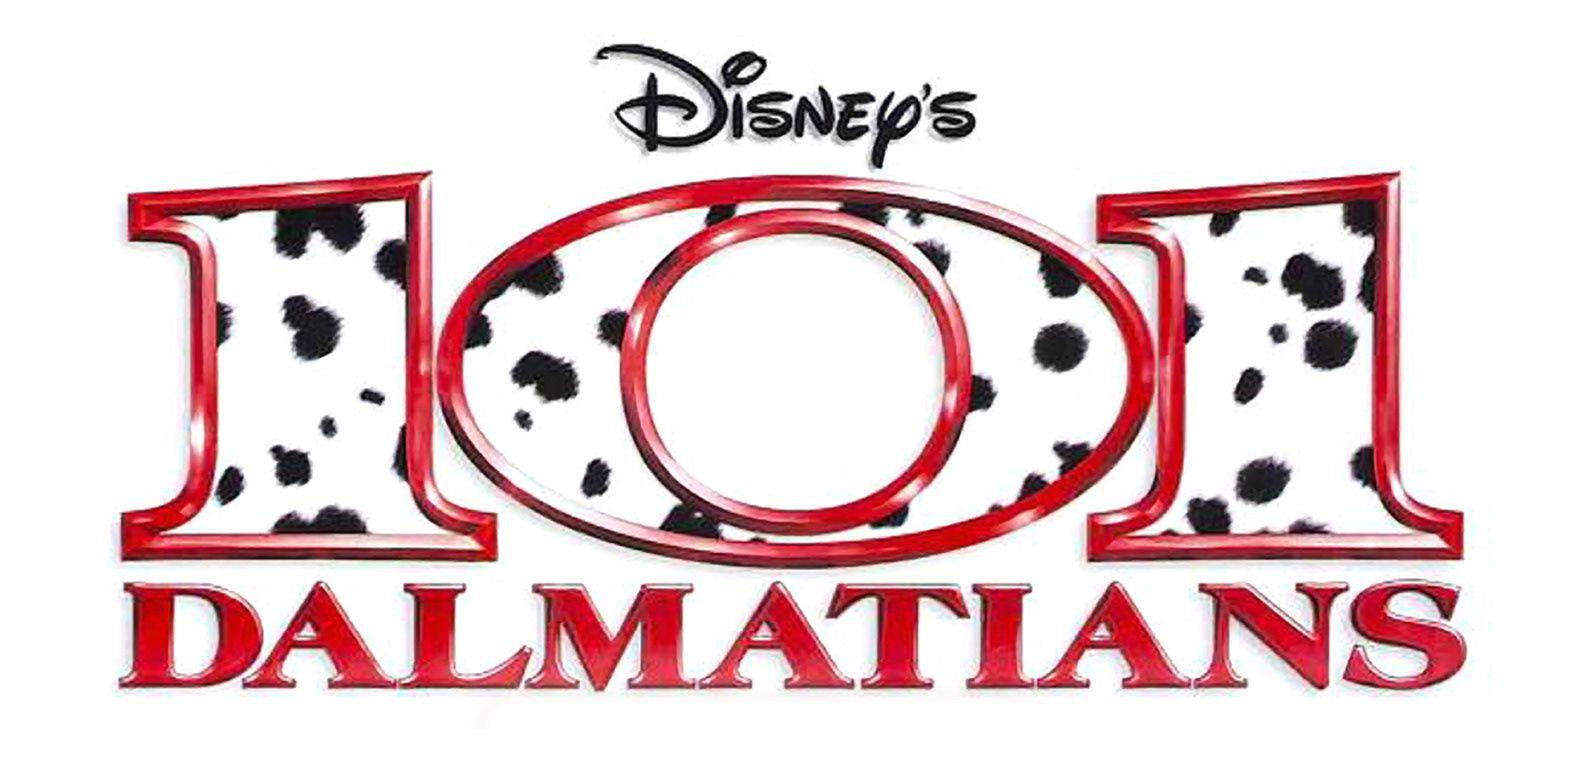 101 Dalmatians Logo - Dalmatians new modern logo One Hundred and One